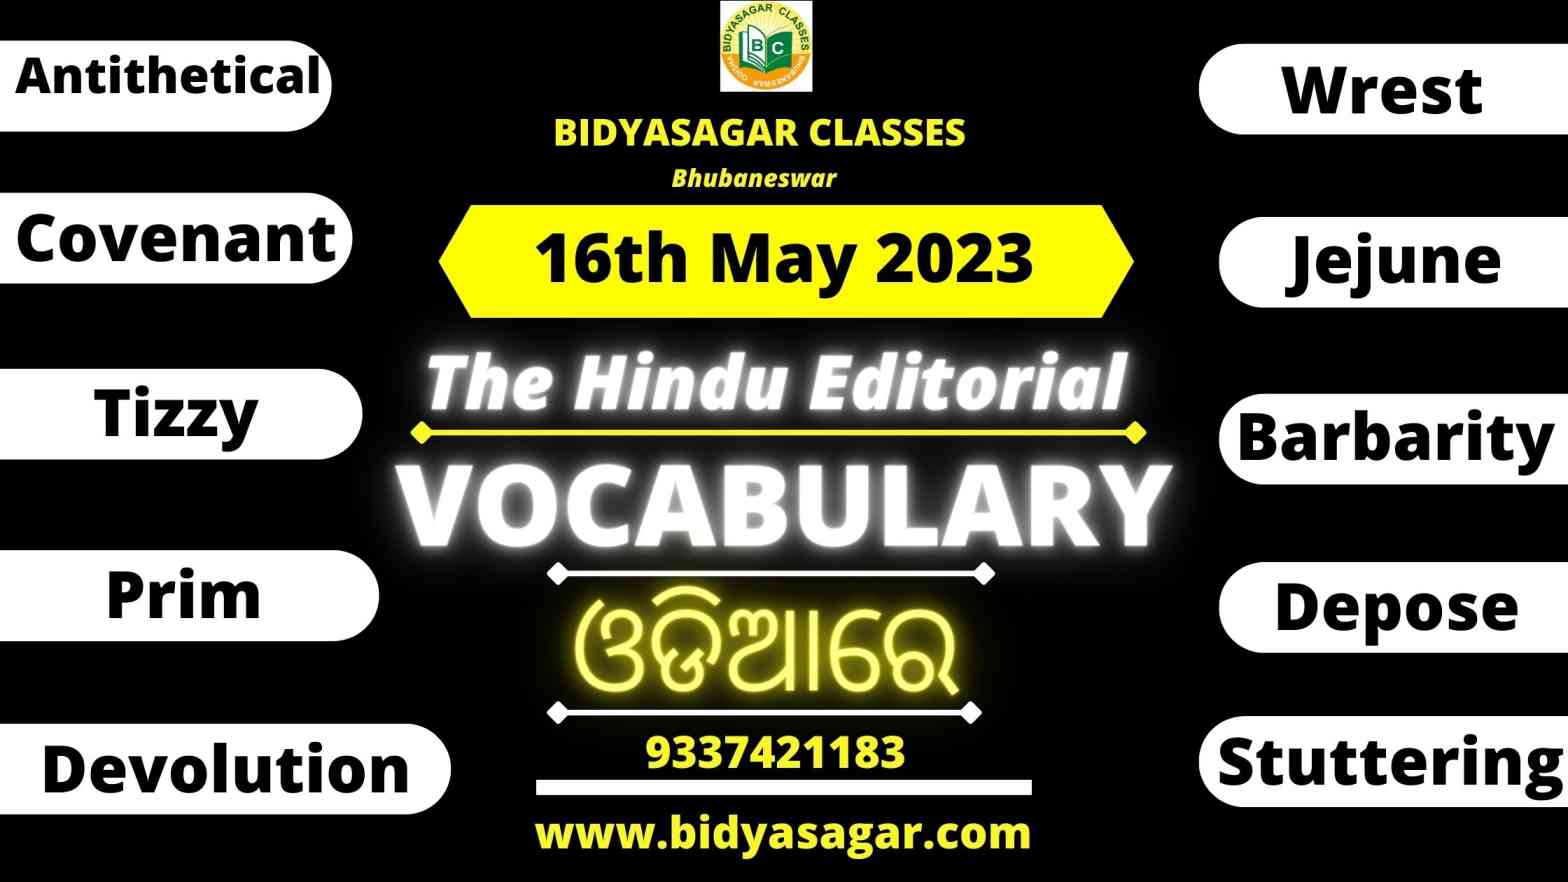 The Hindu Editorial Vocabulary of 16th May 2023